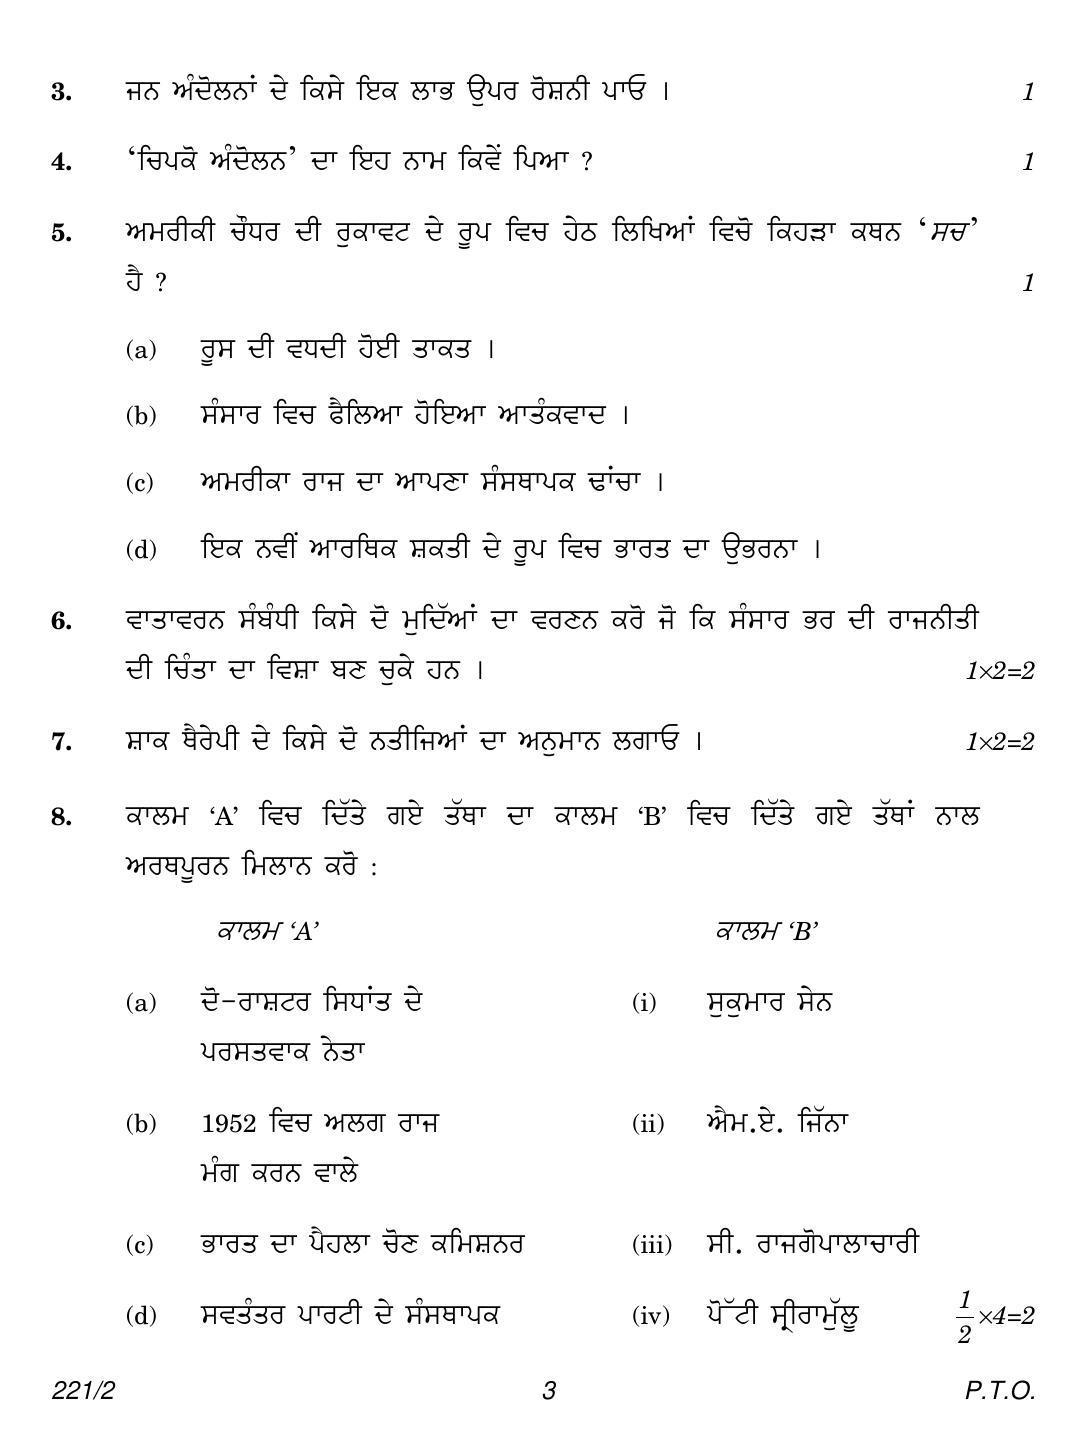 CBSE Class 12 221-2 (Political Science Punjabi) 2018 Question Paper - Page 3